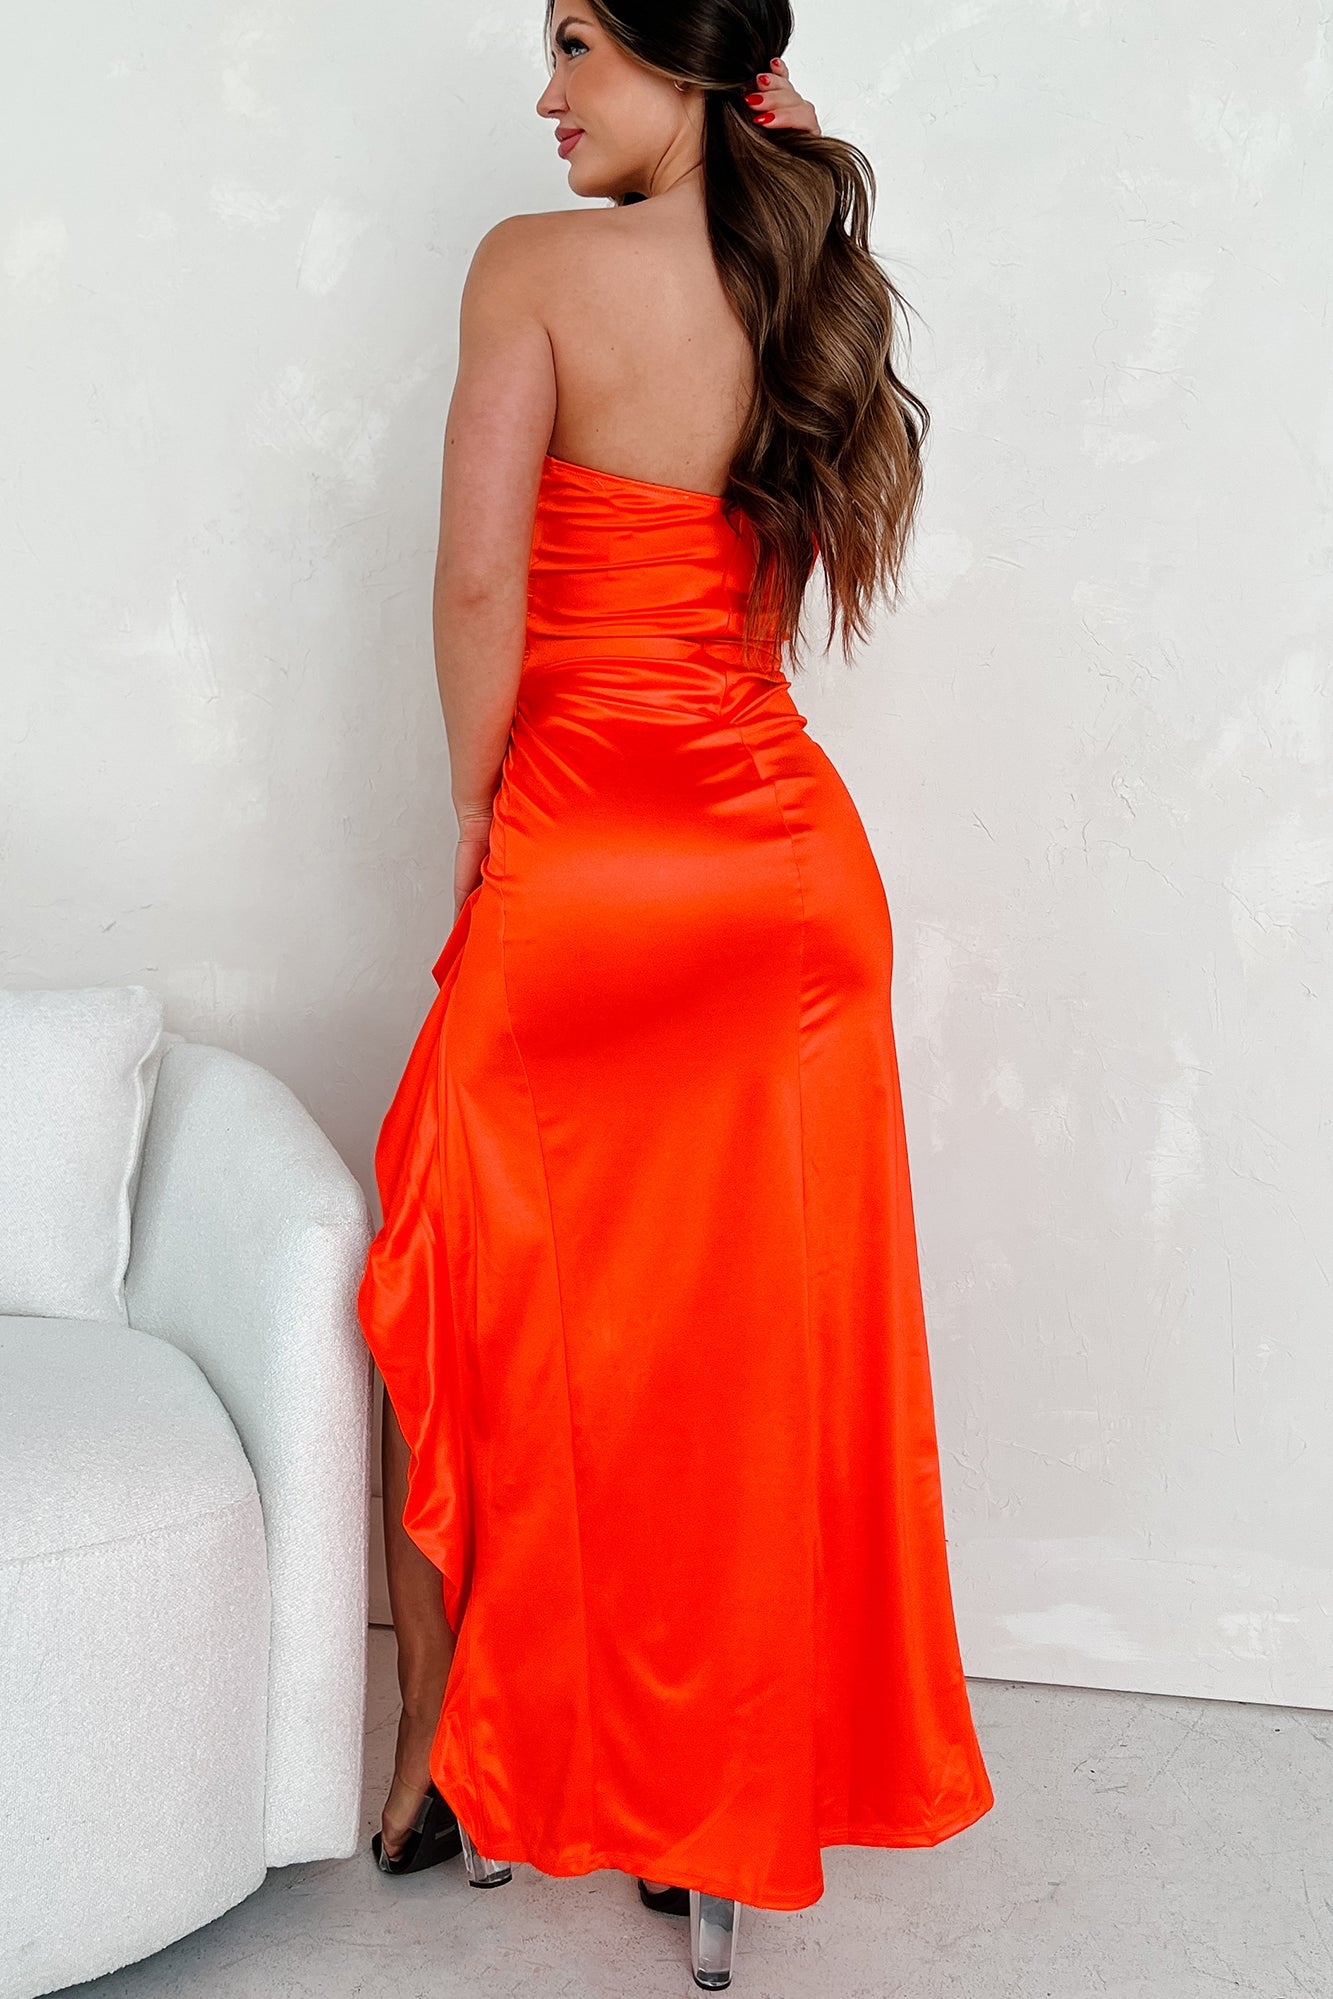 Finding My Fire High-Low Strapless Ruffle Dress (Red Orange) - NanaMacs